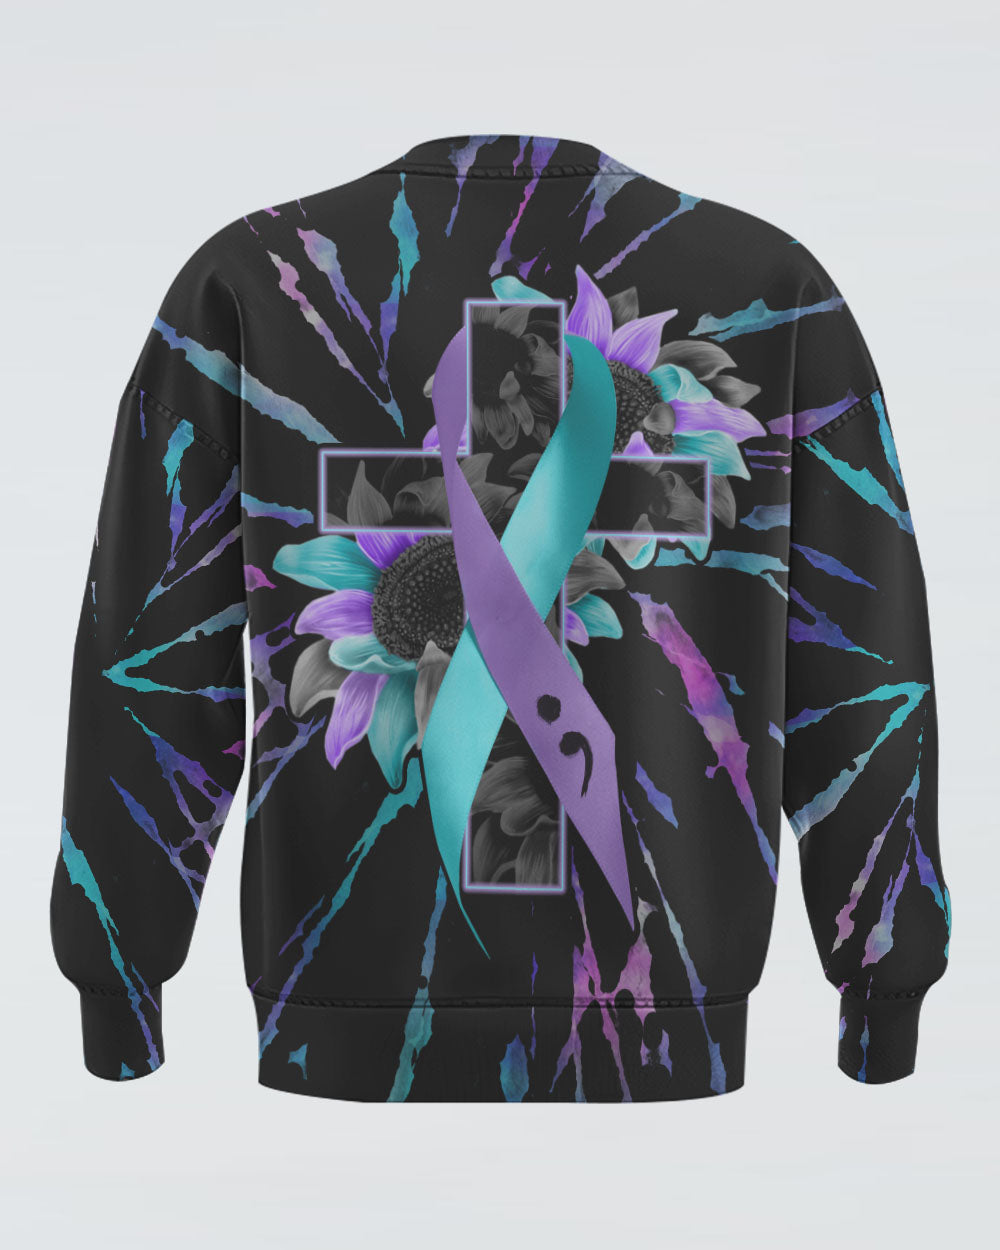 Sunflower Cross Ribbon Tie Dye Women's Suicide Prevention Awareness Sweatshirt